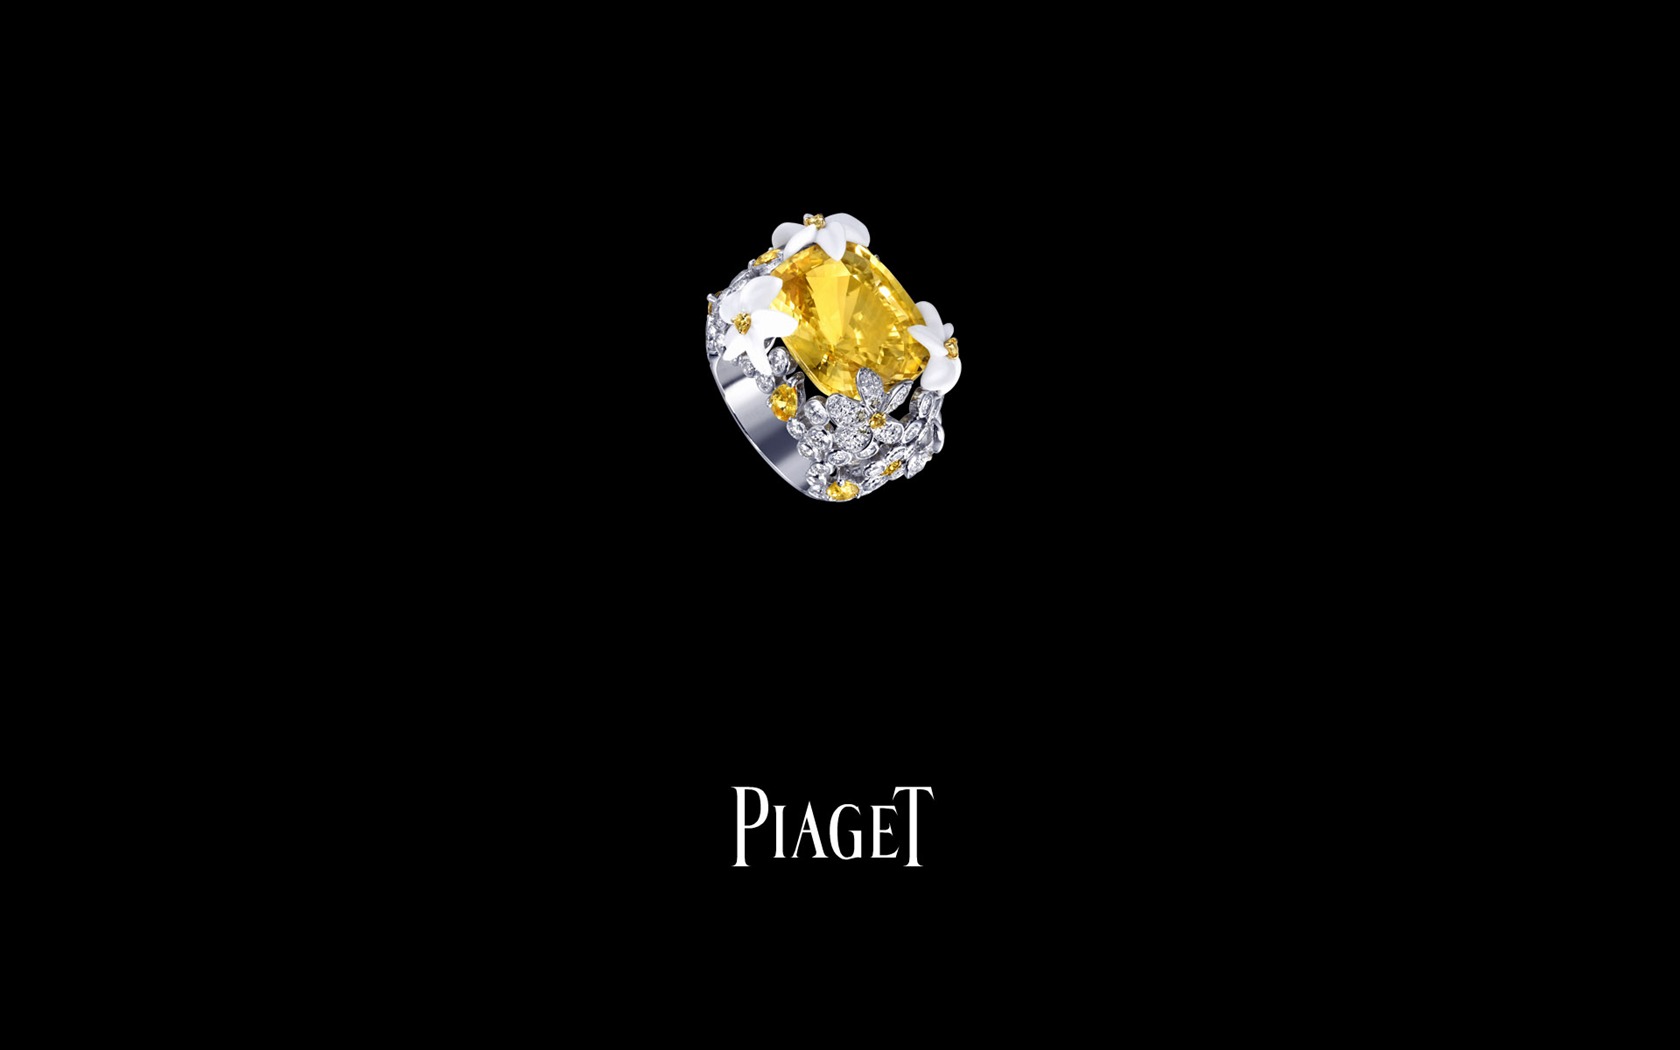 Piaget diamond jewelry wallpaper (4) #1 - 1680x1050